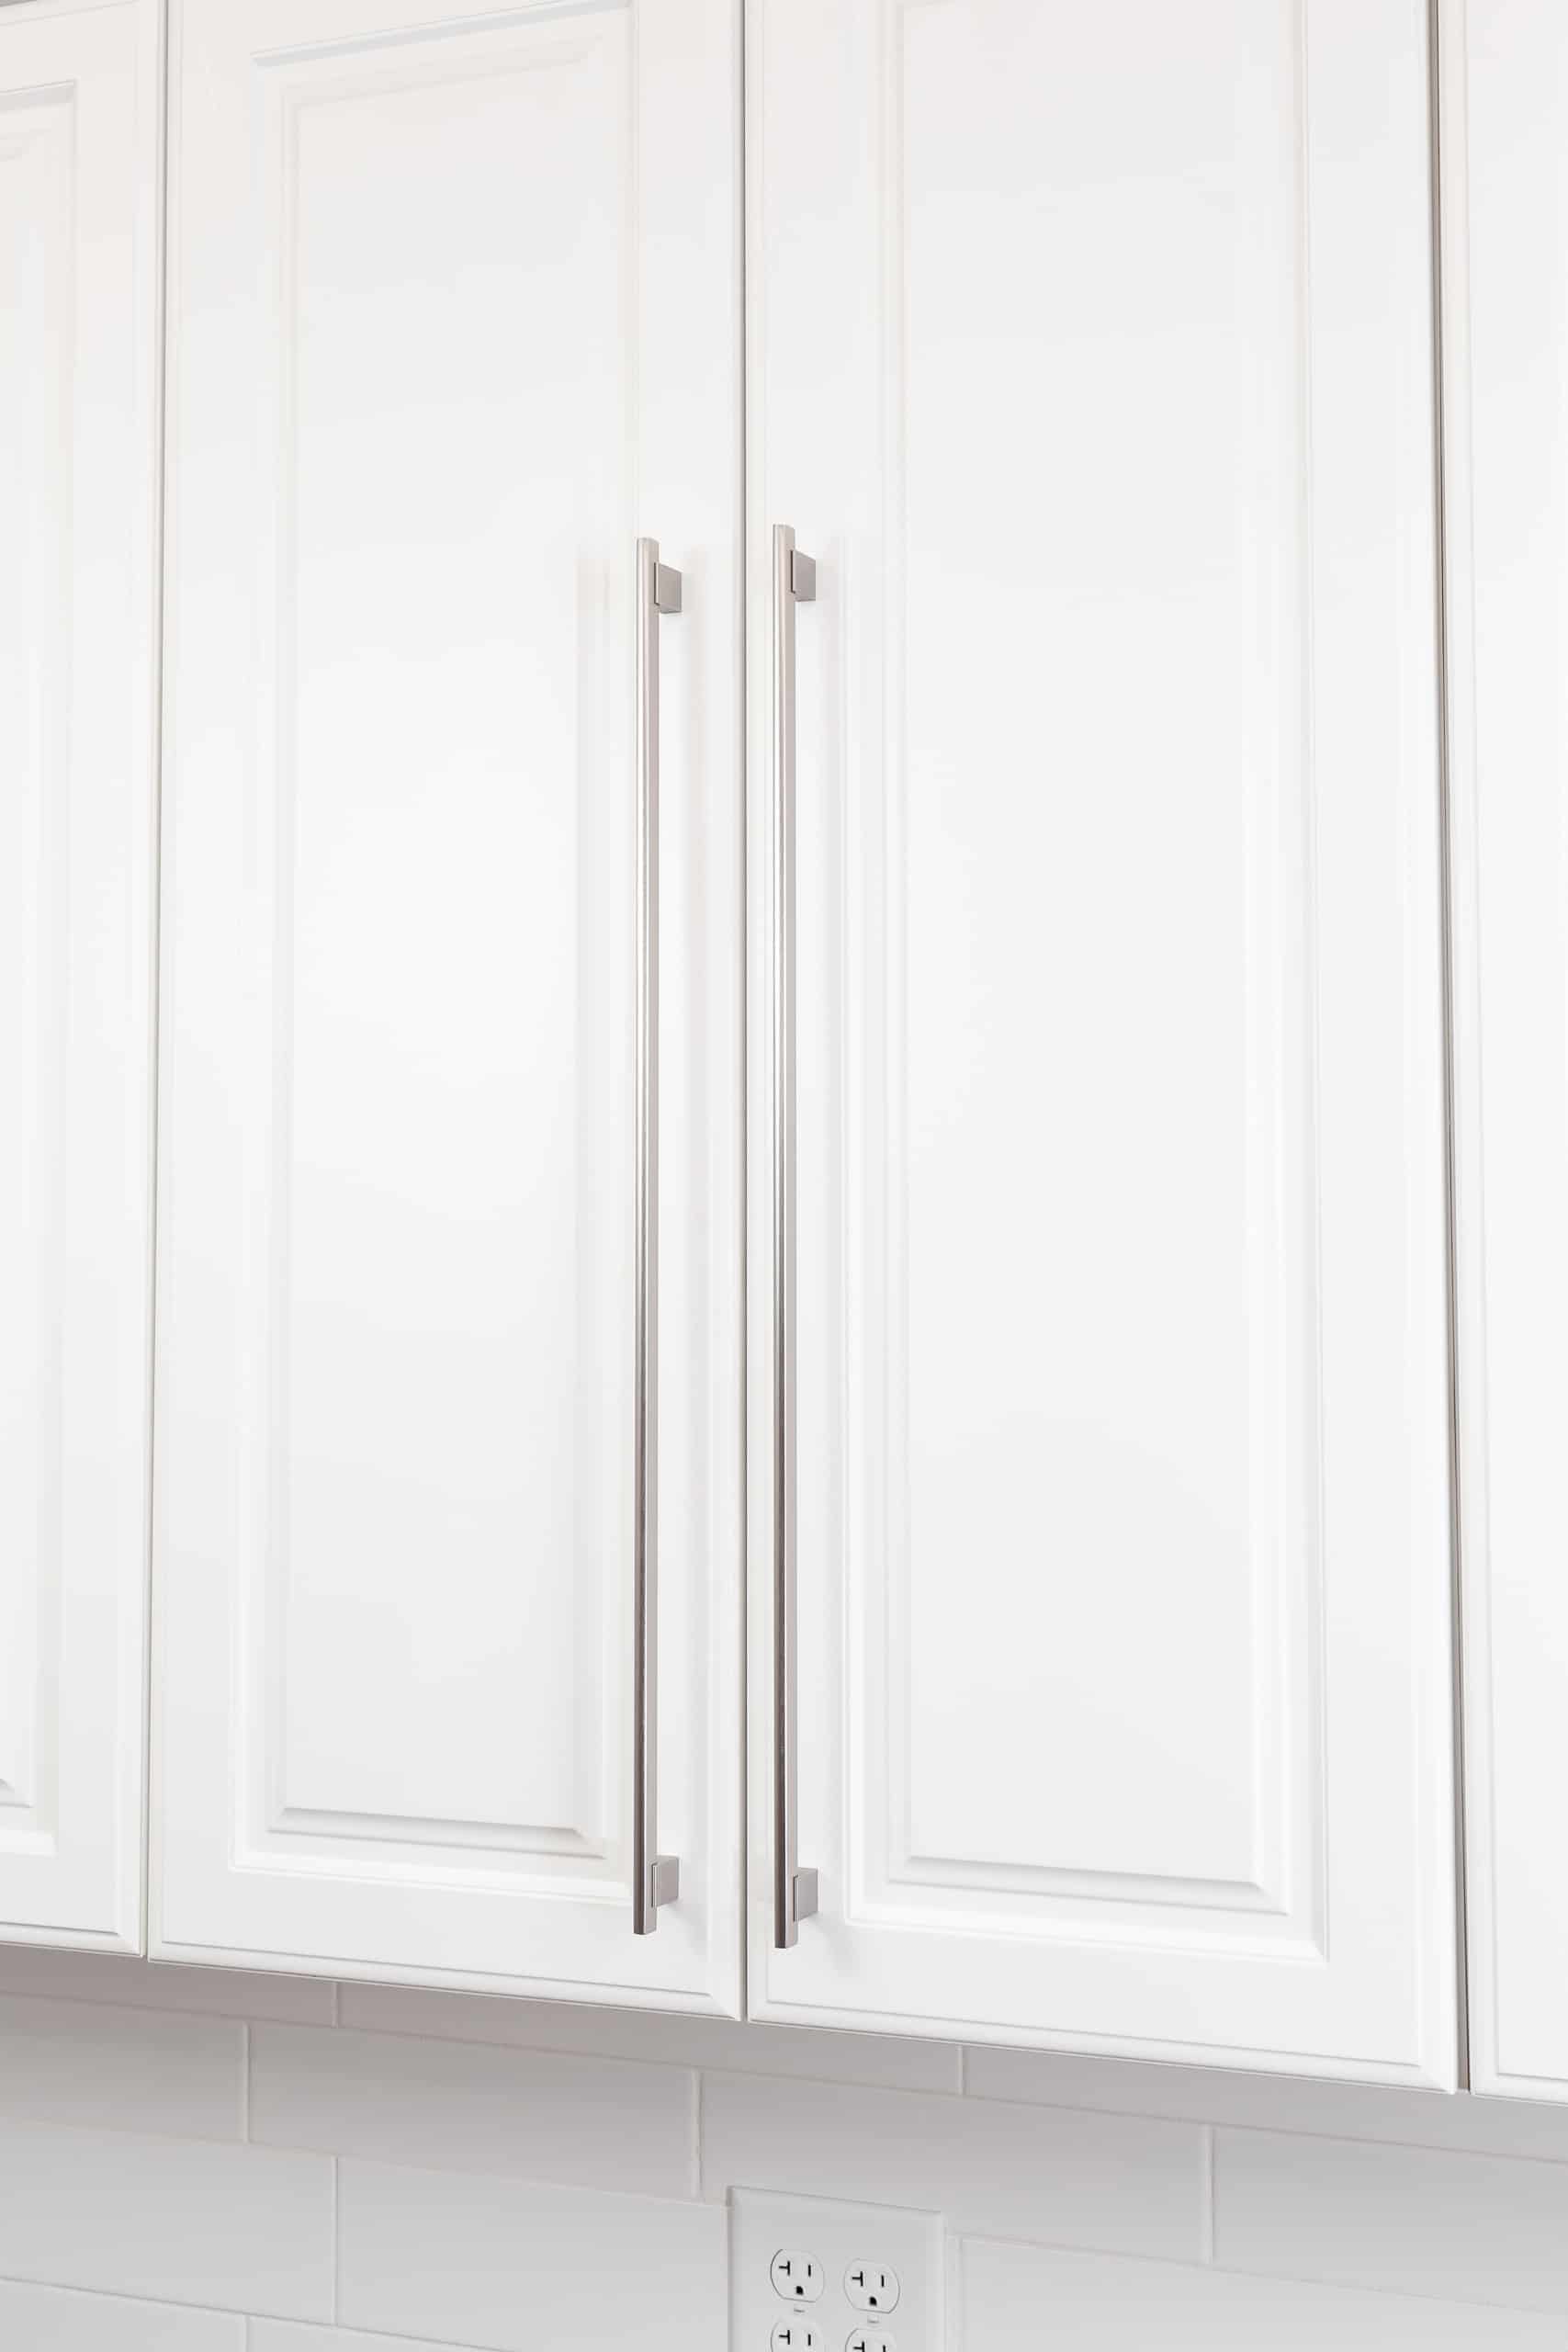 White kitchen cabinet door panel installed long handle pulls